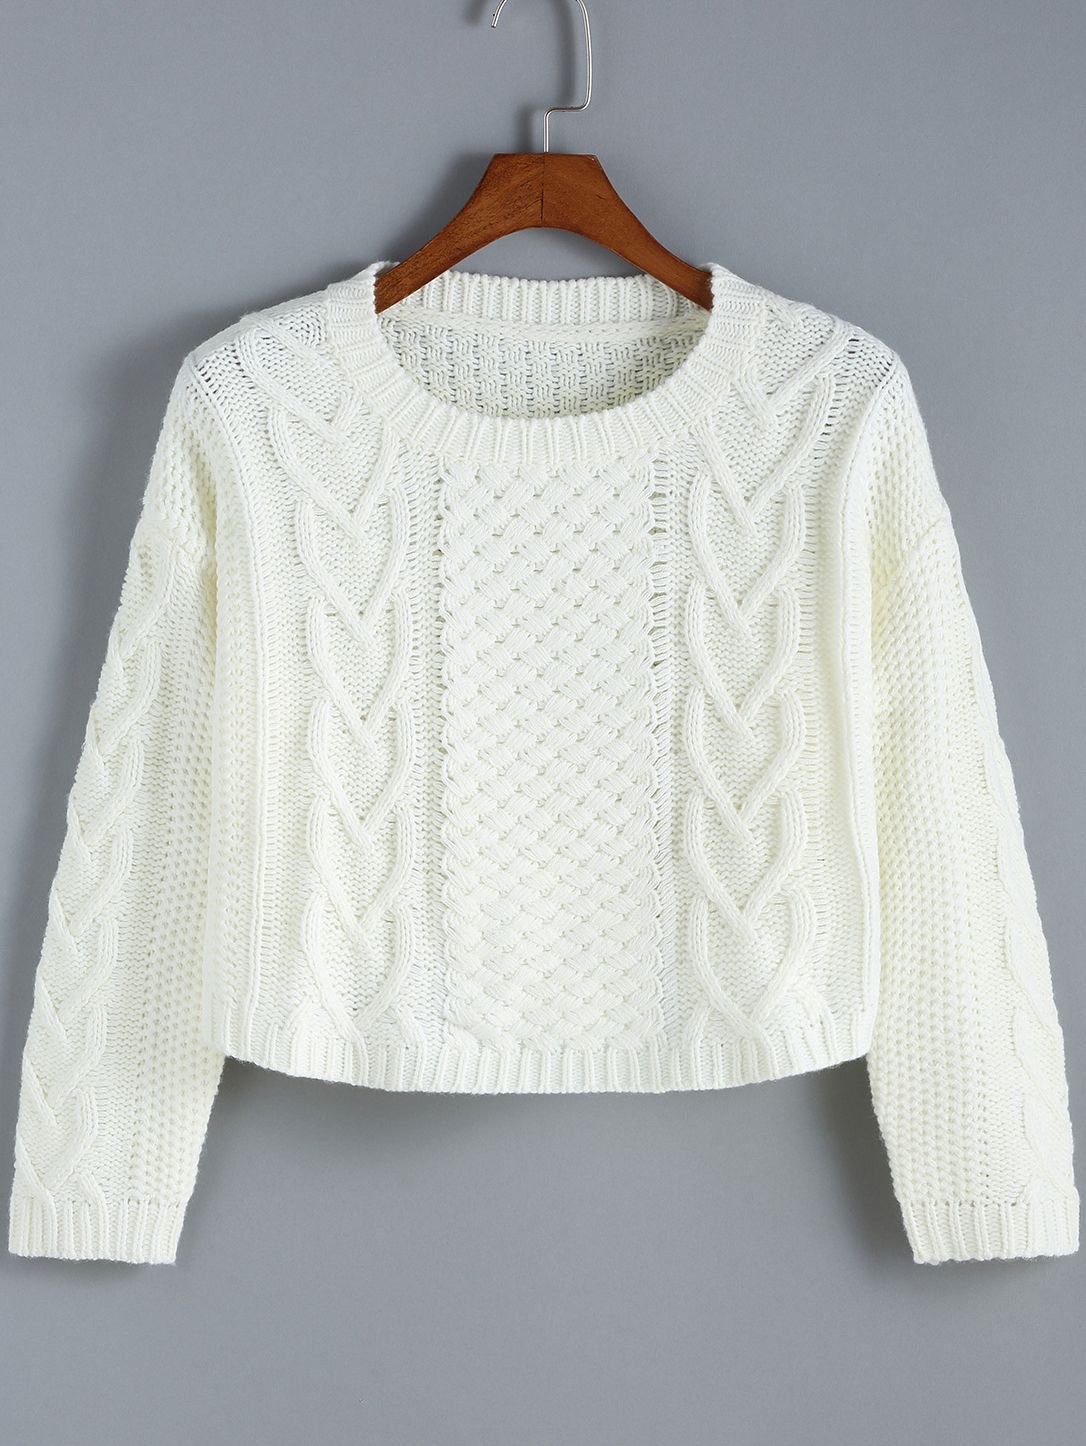 Белый свитер женский модный